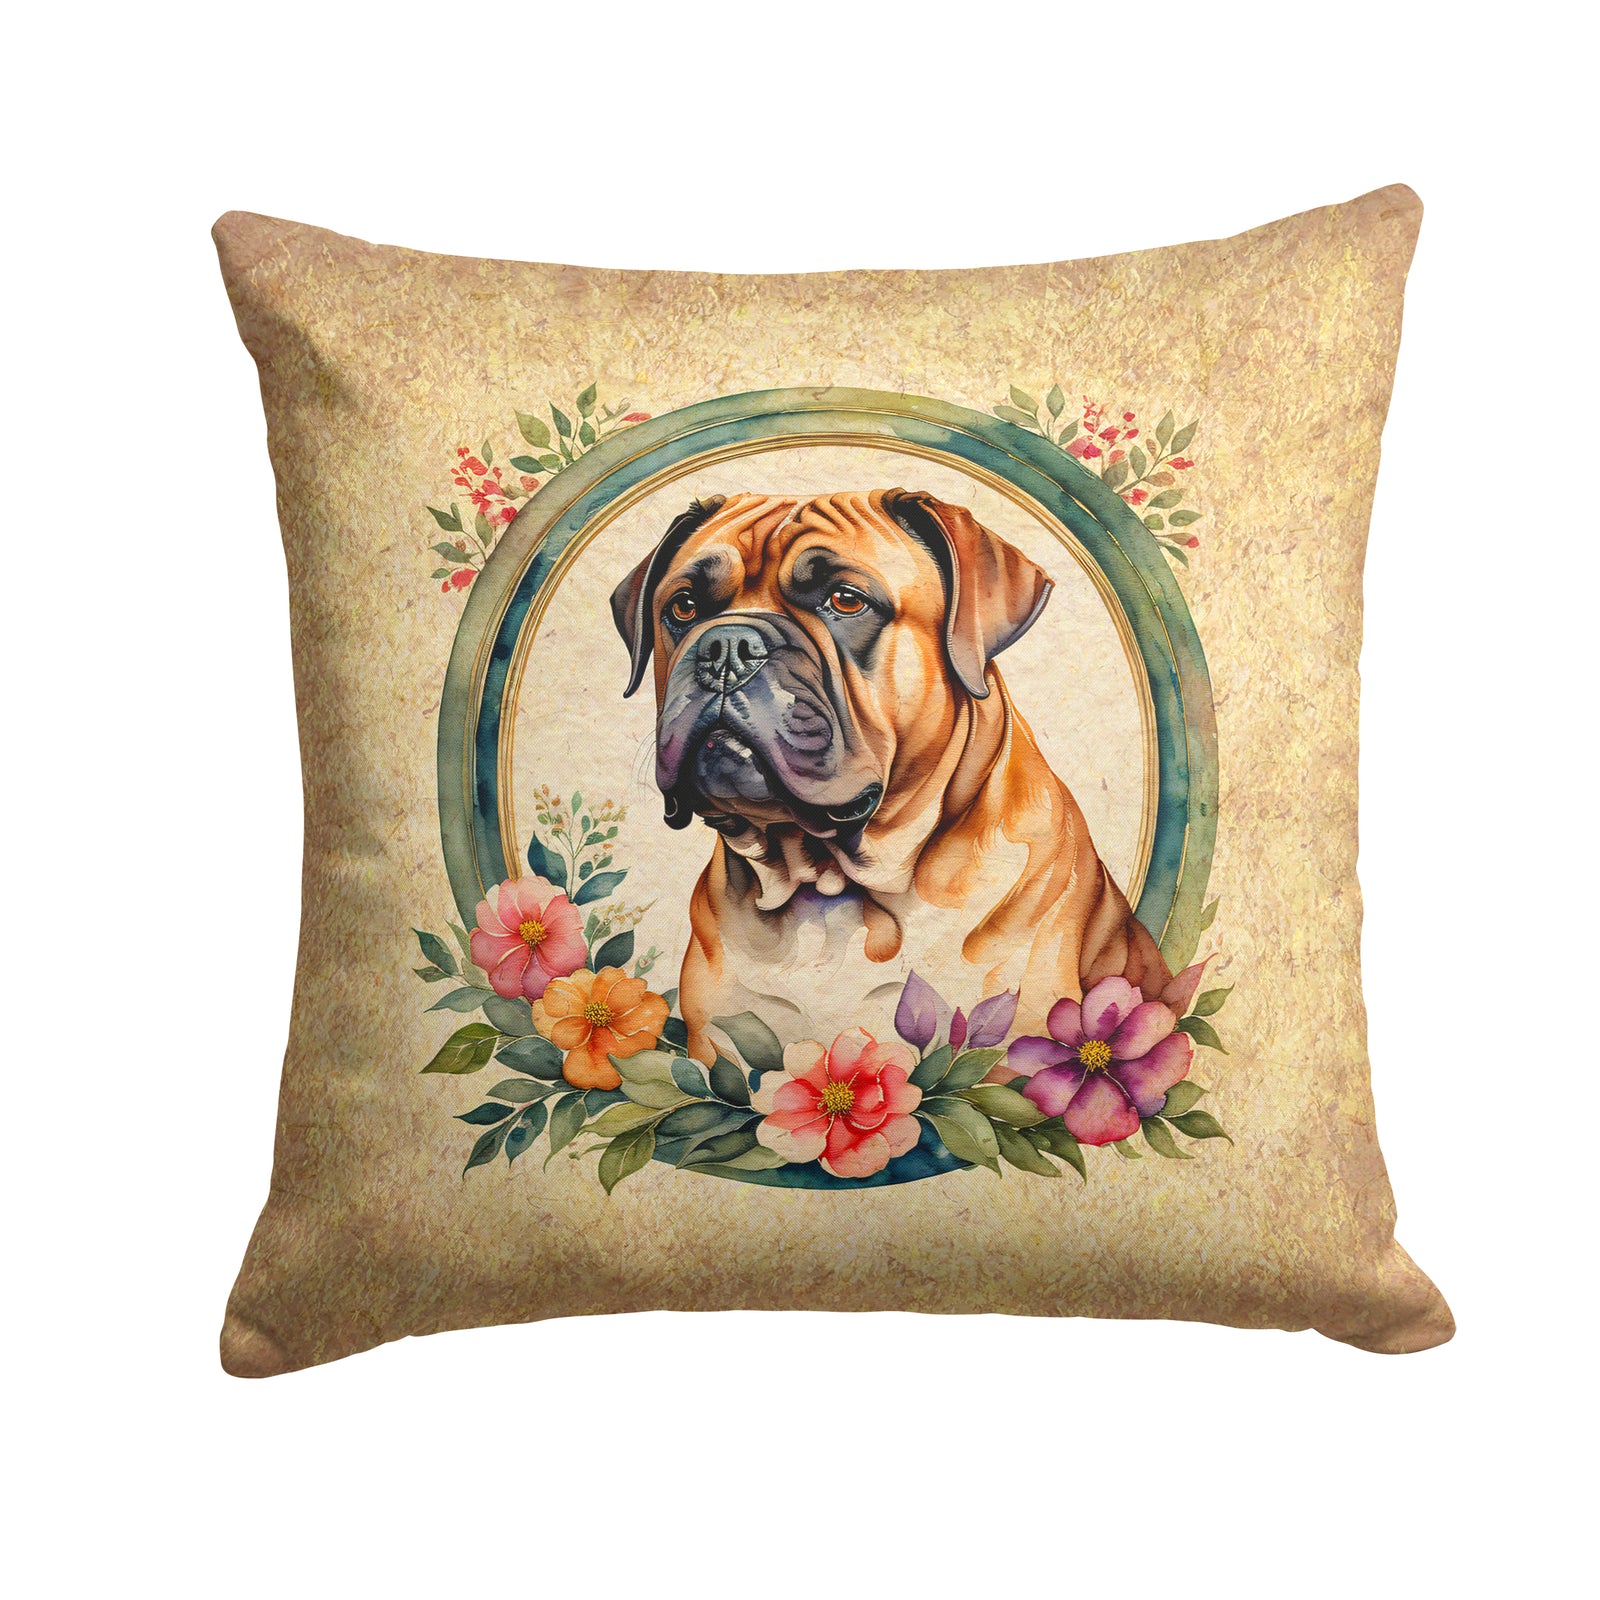 Buy this Dogue de Bordeaux and Flowers Fabric Decorative Pillow